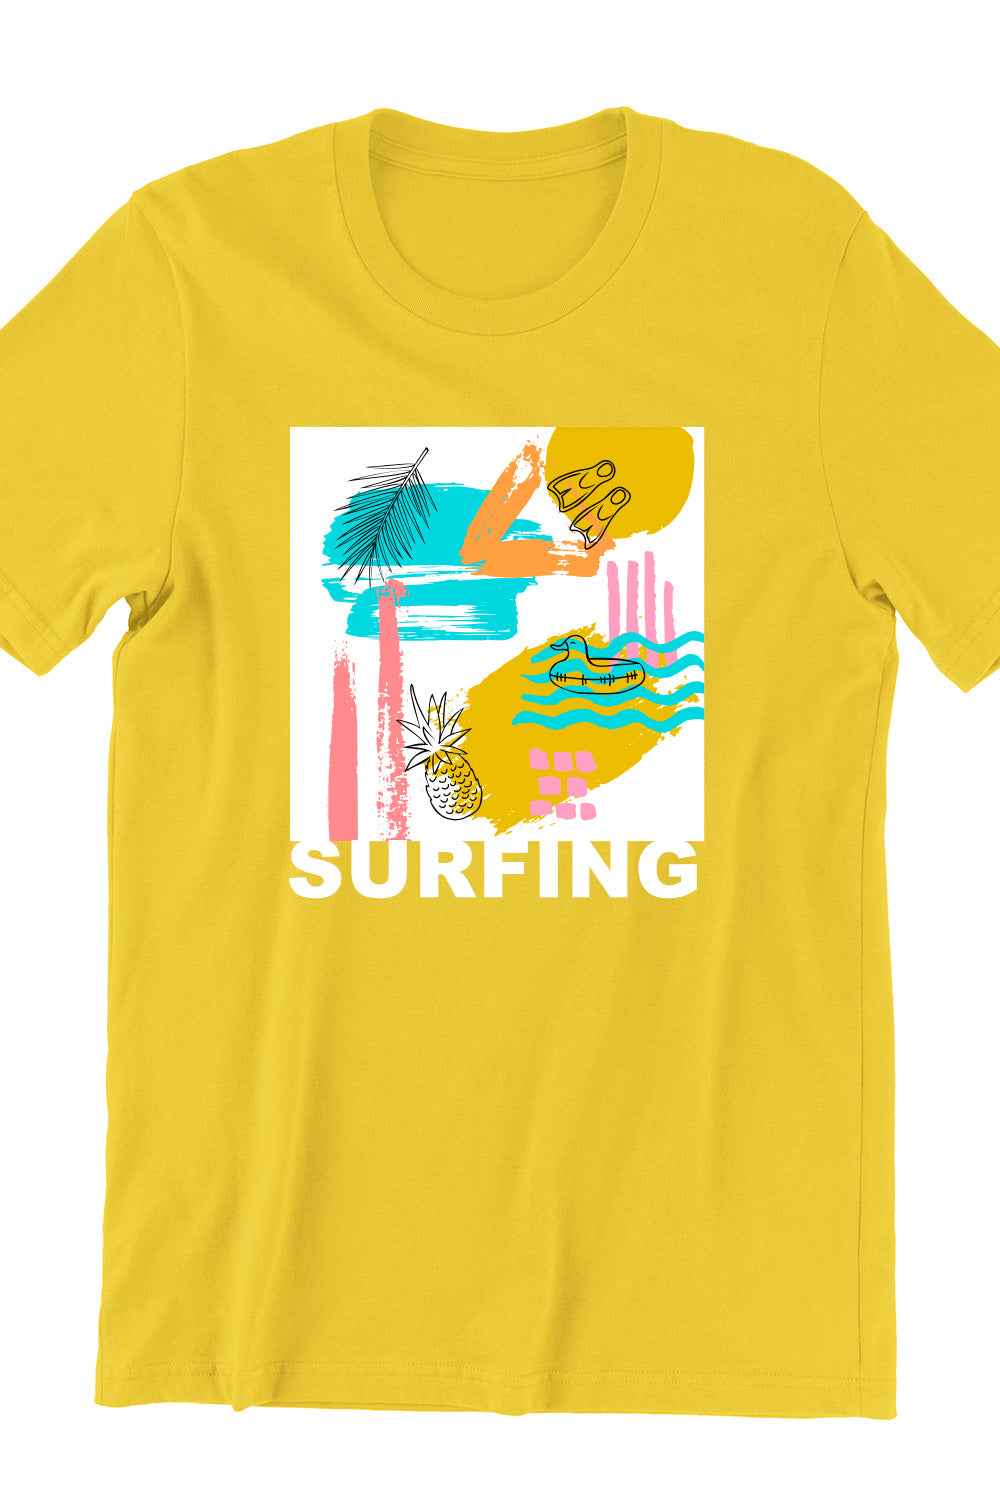 Surfing Graphic Yellow Tshirt